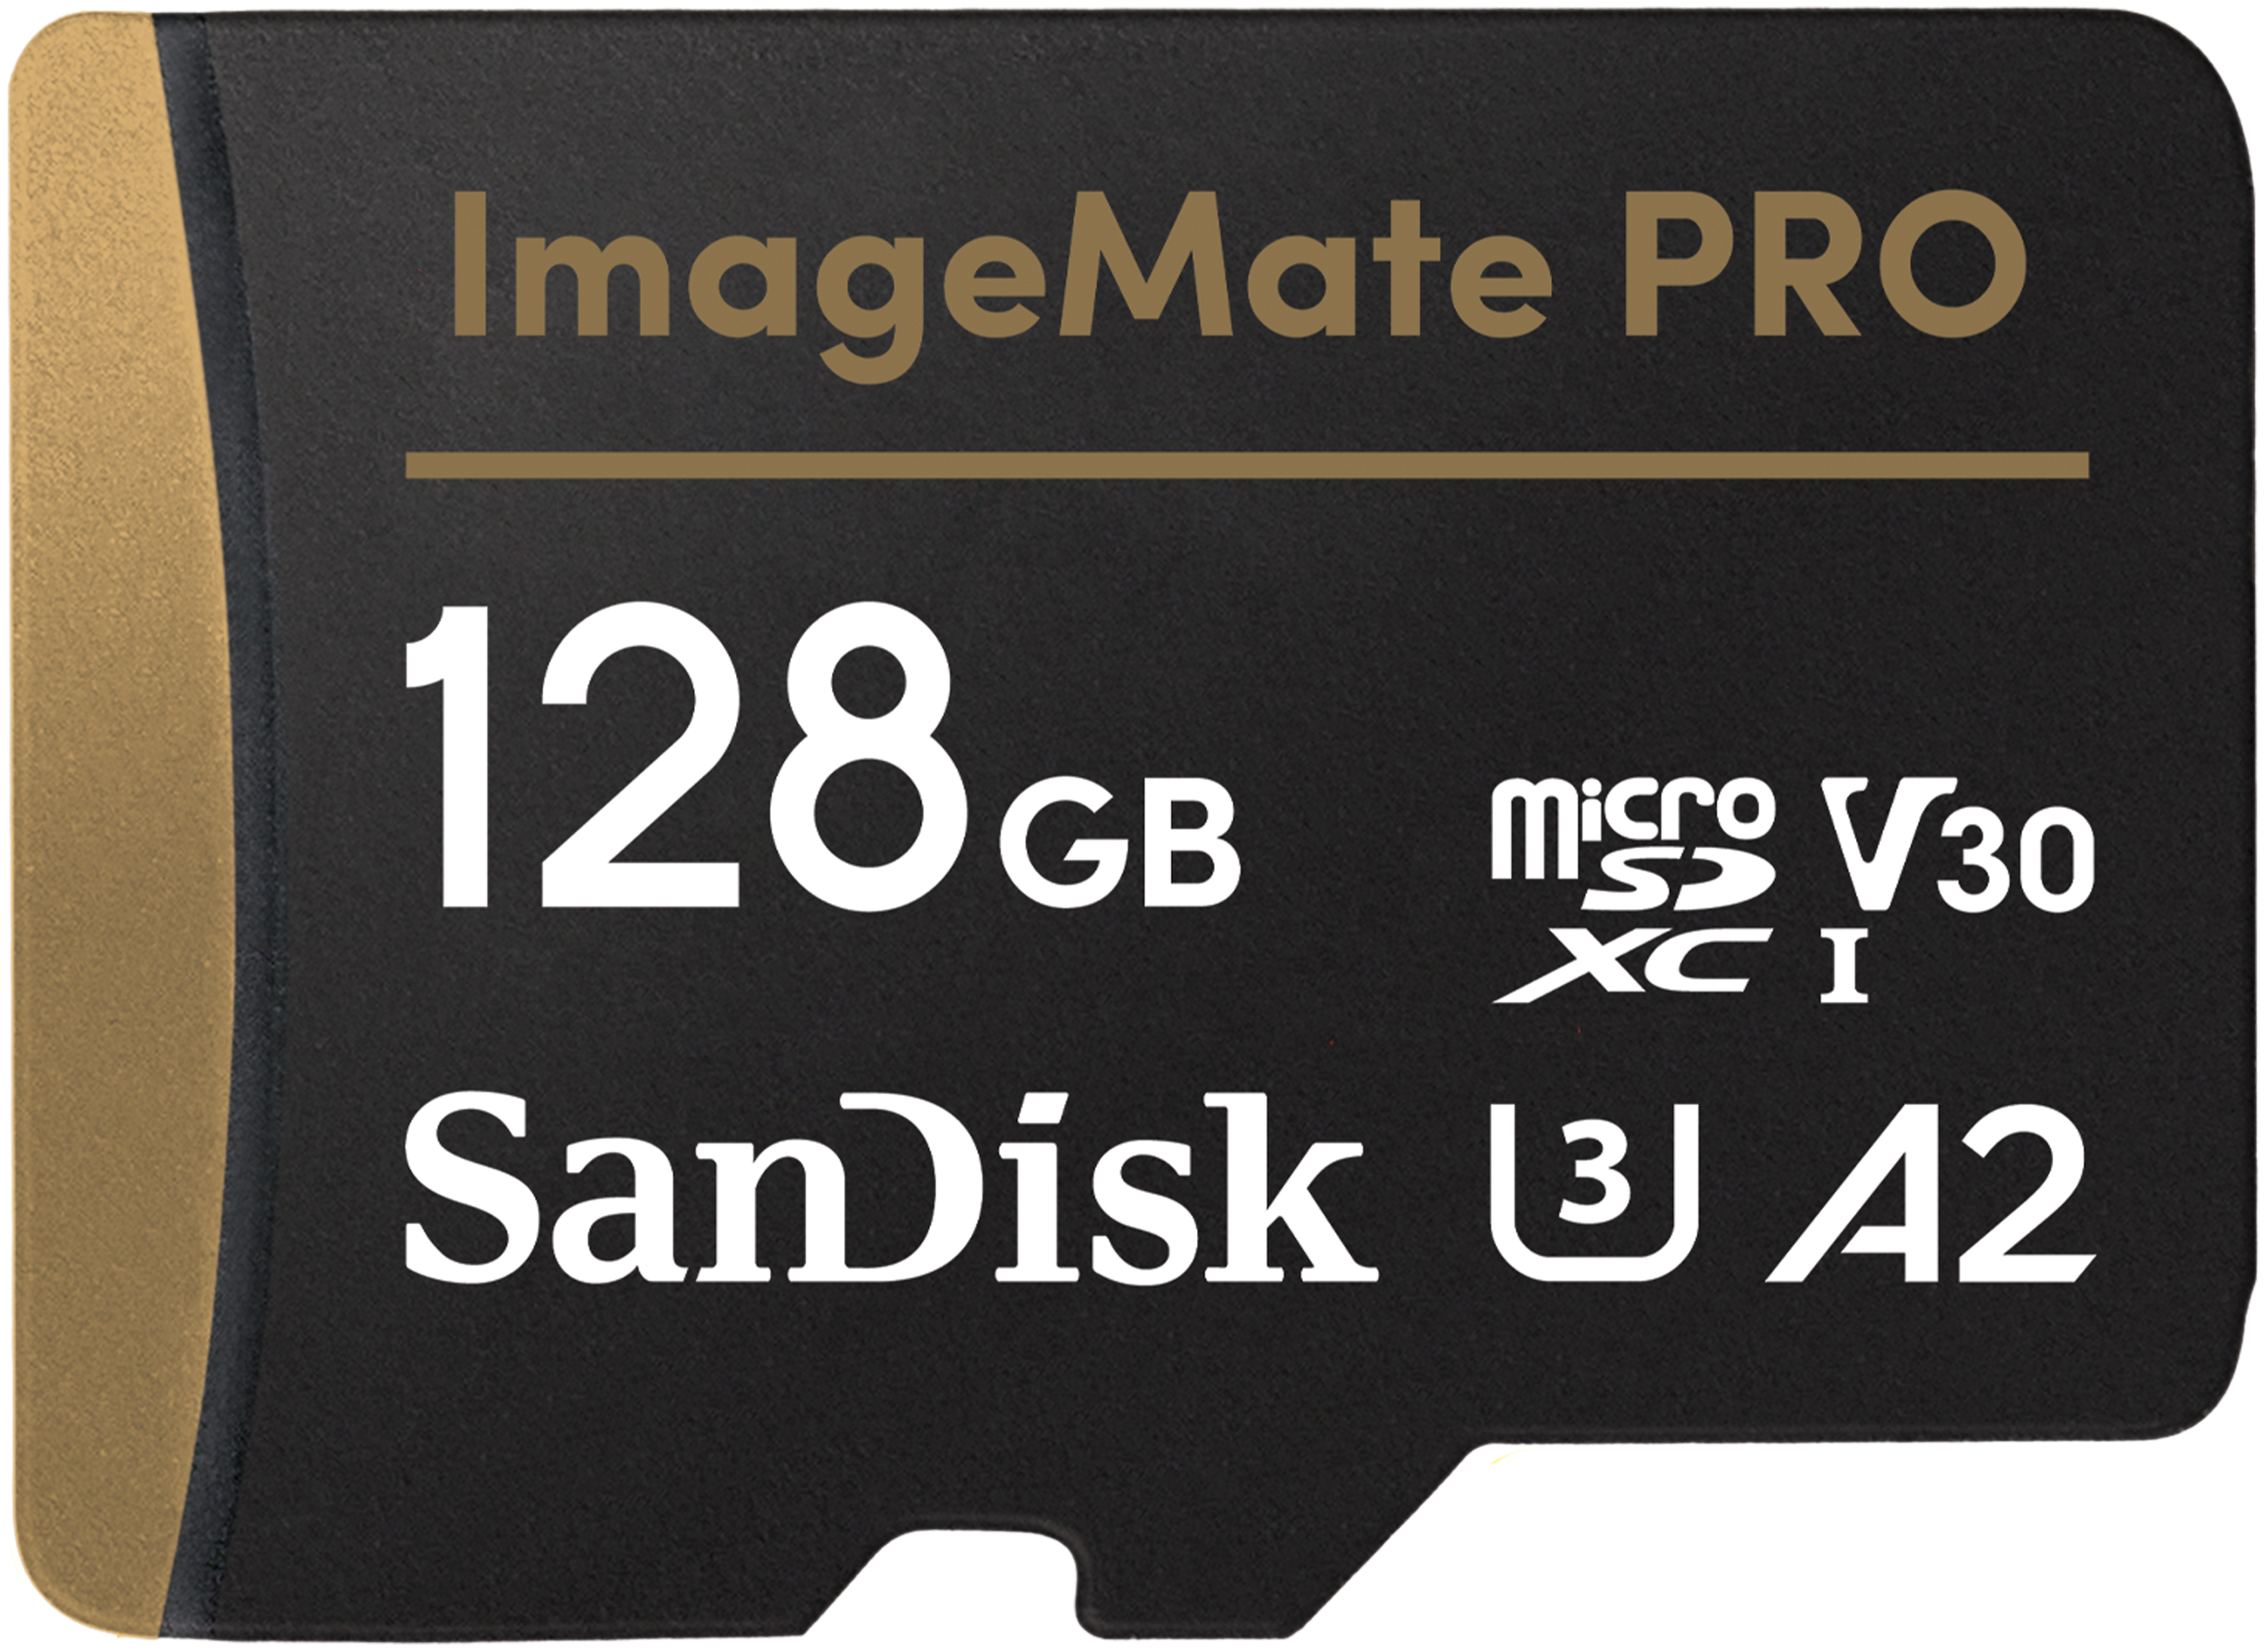 SanDisk 128GB ImageMate Pro microSDXC UHS 1 Memory Card - Up to 200MB/s - SDSQXBZ128GAW6KA - image 1 of 3